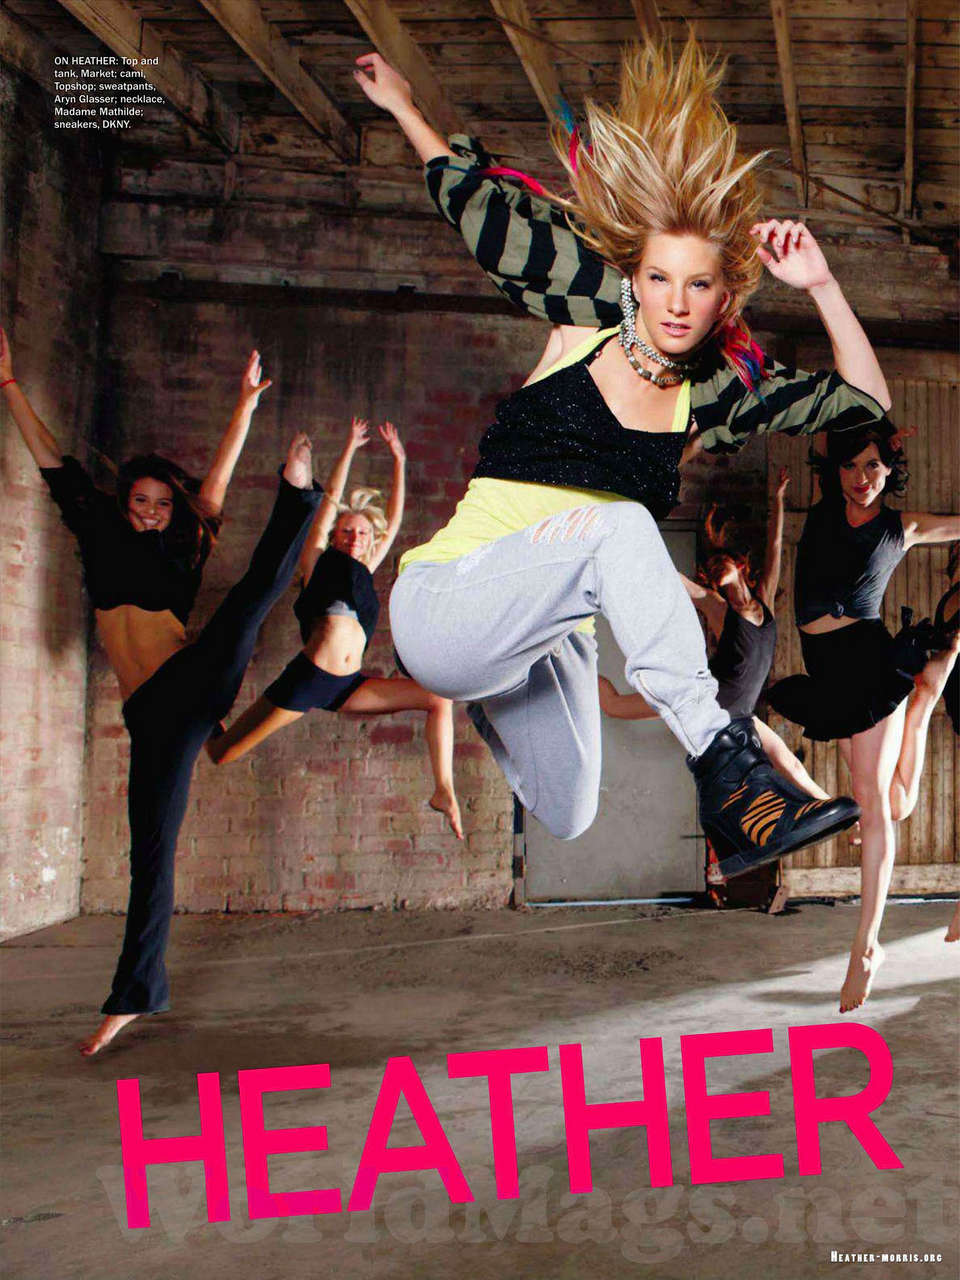 Heather Morris Seventeen Magazine